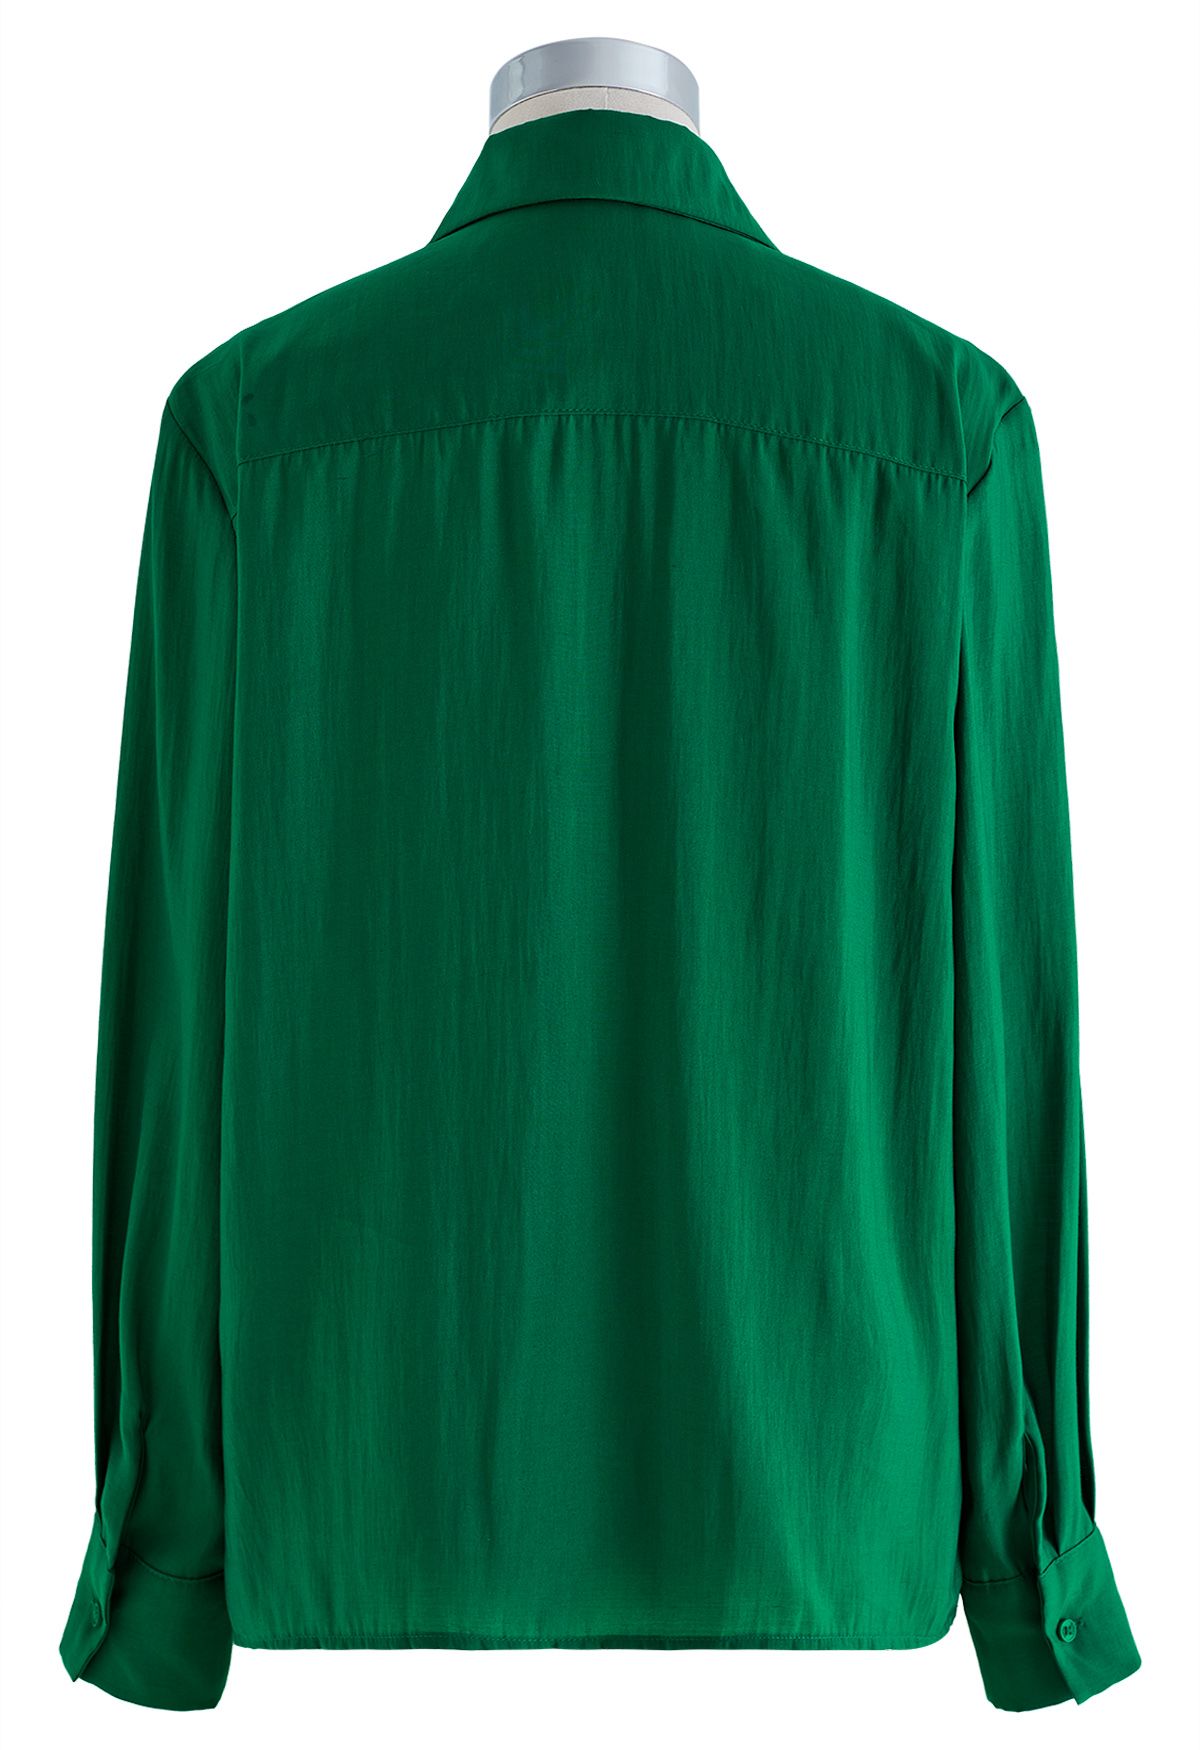 Side Vent Button Down Ruffle Shirt in Emerald